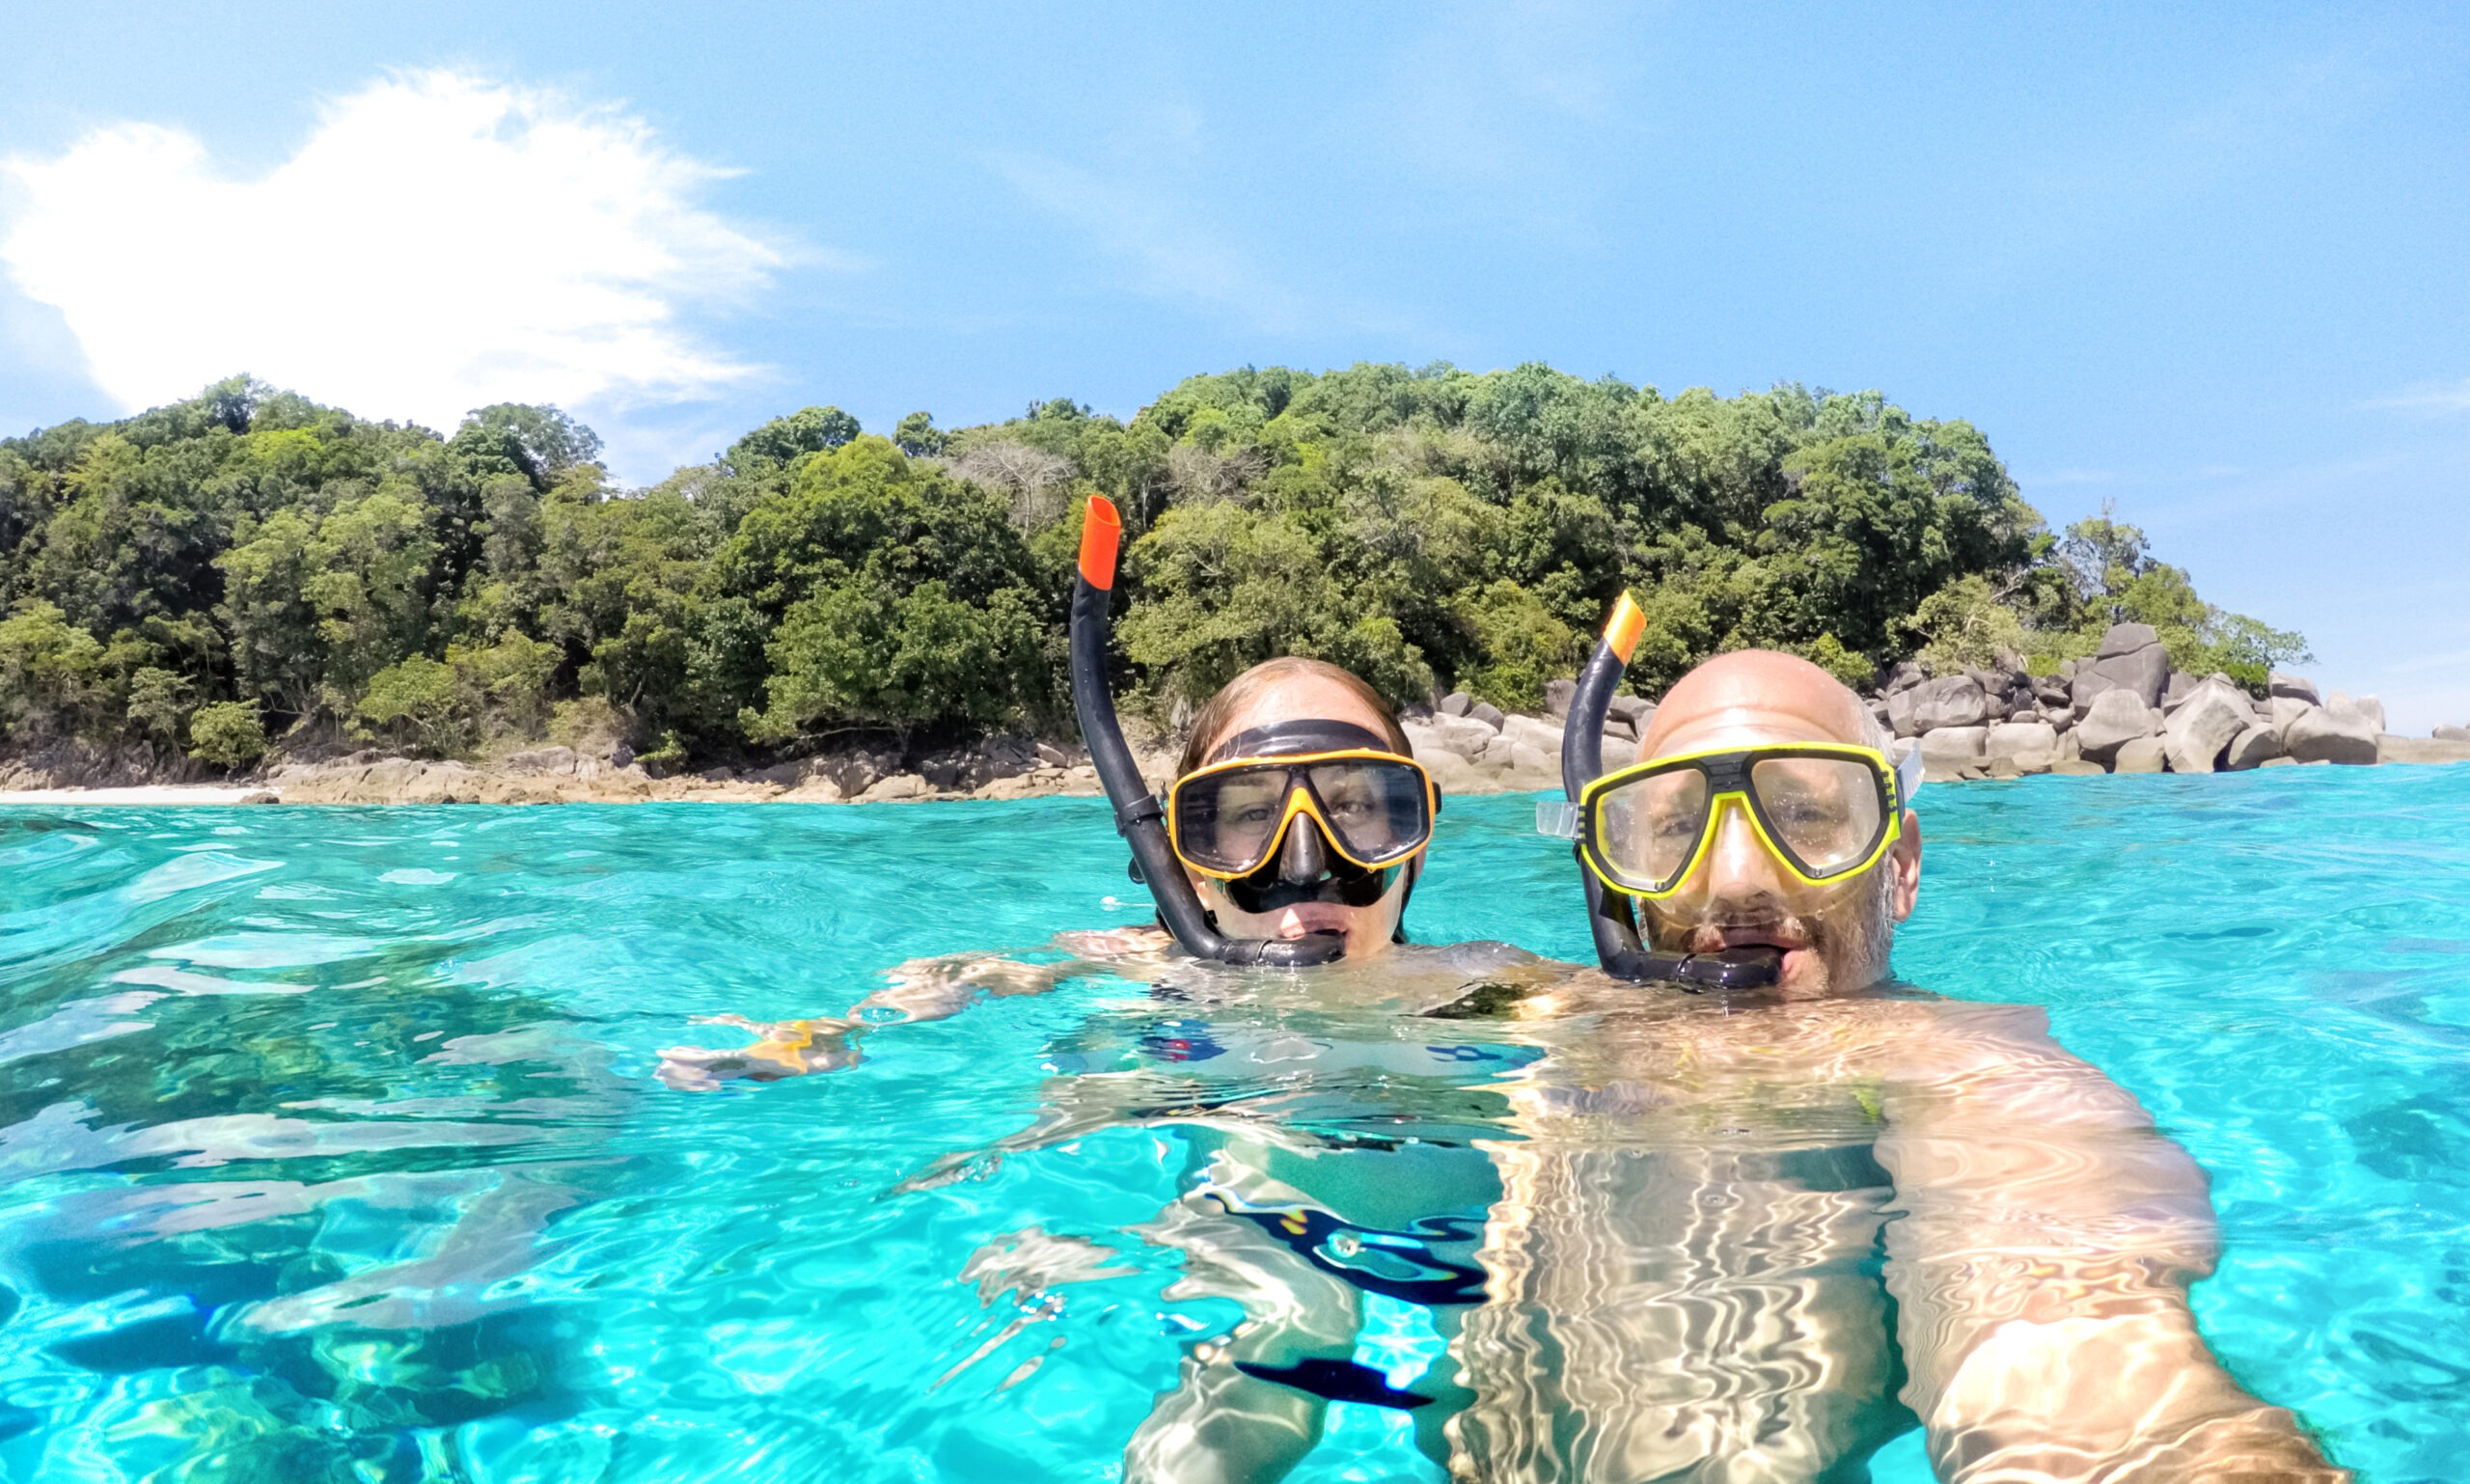 young-couple-taking-selfie-in-tropical-scenario-with-waterproof-camera